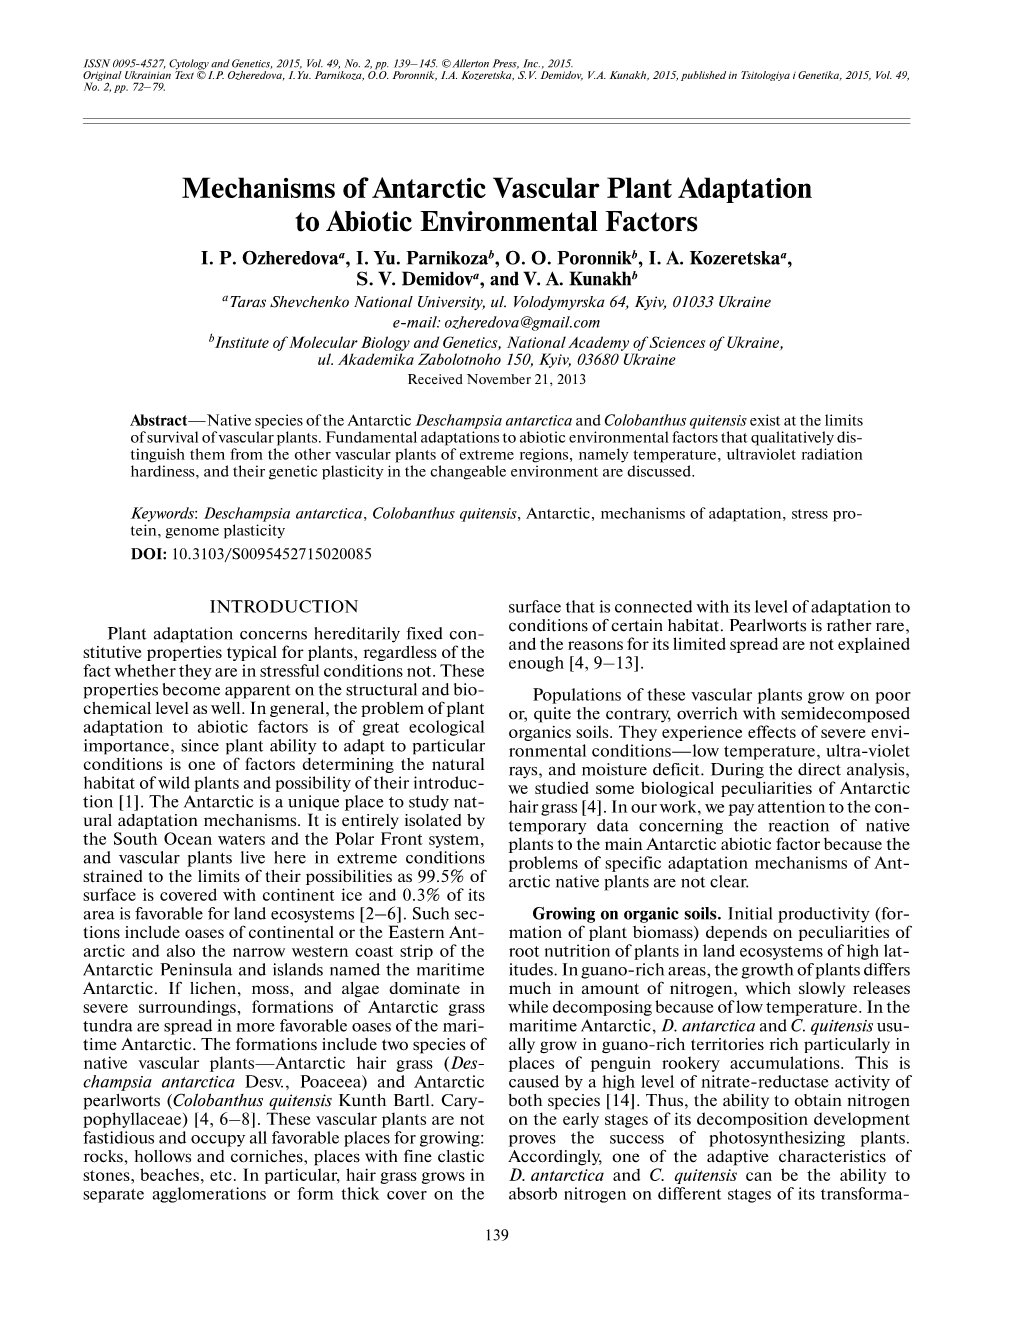 Mechanisms of Antarctic Vascular Plant Adaptation to Abiotic Environmental Factors I